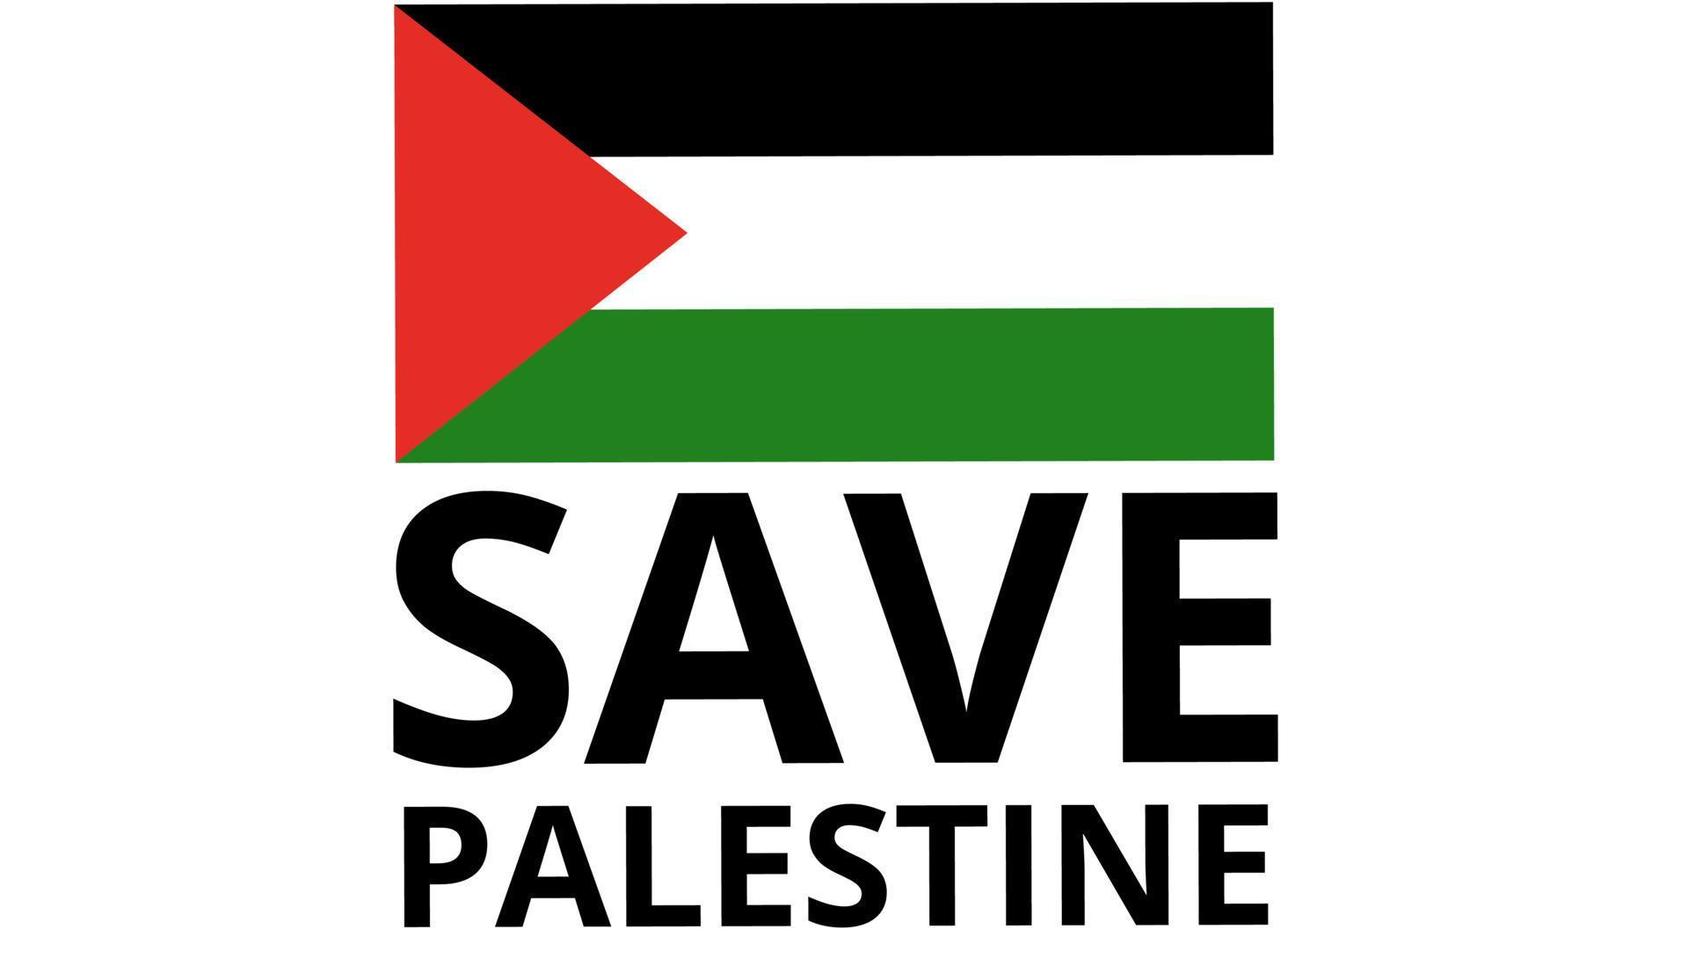 Flagge von Palästina mit Text speichern Palästina vektor